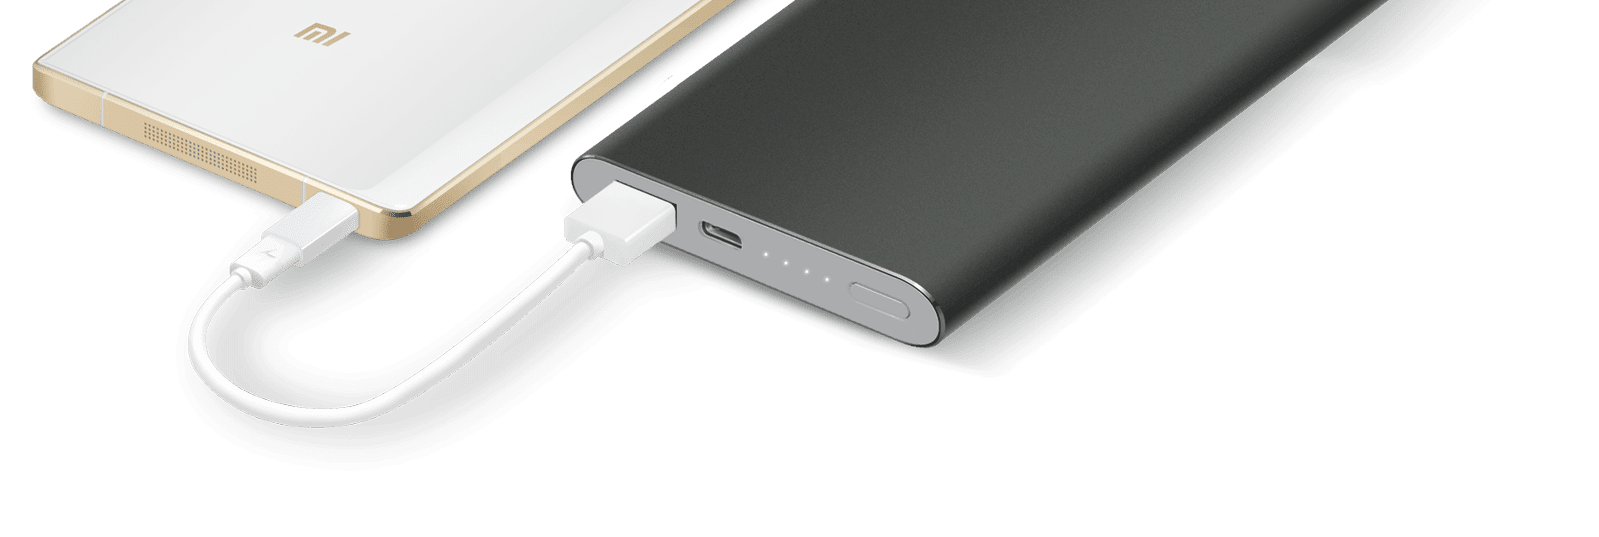 Pin dự phòng Xiaomi 2017